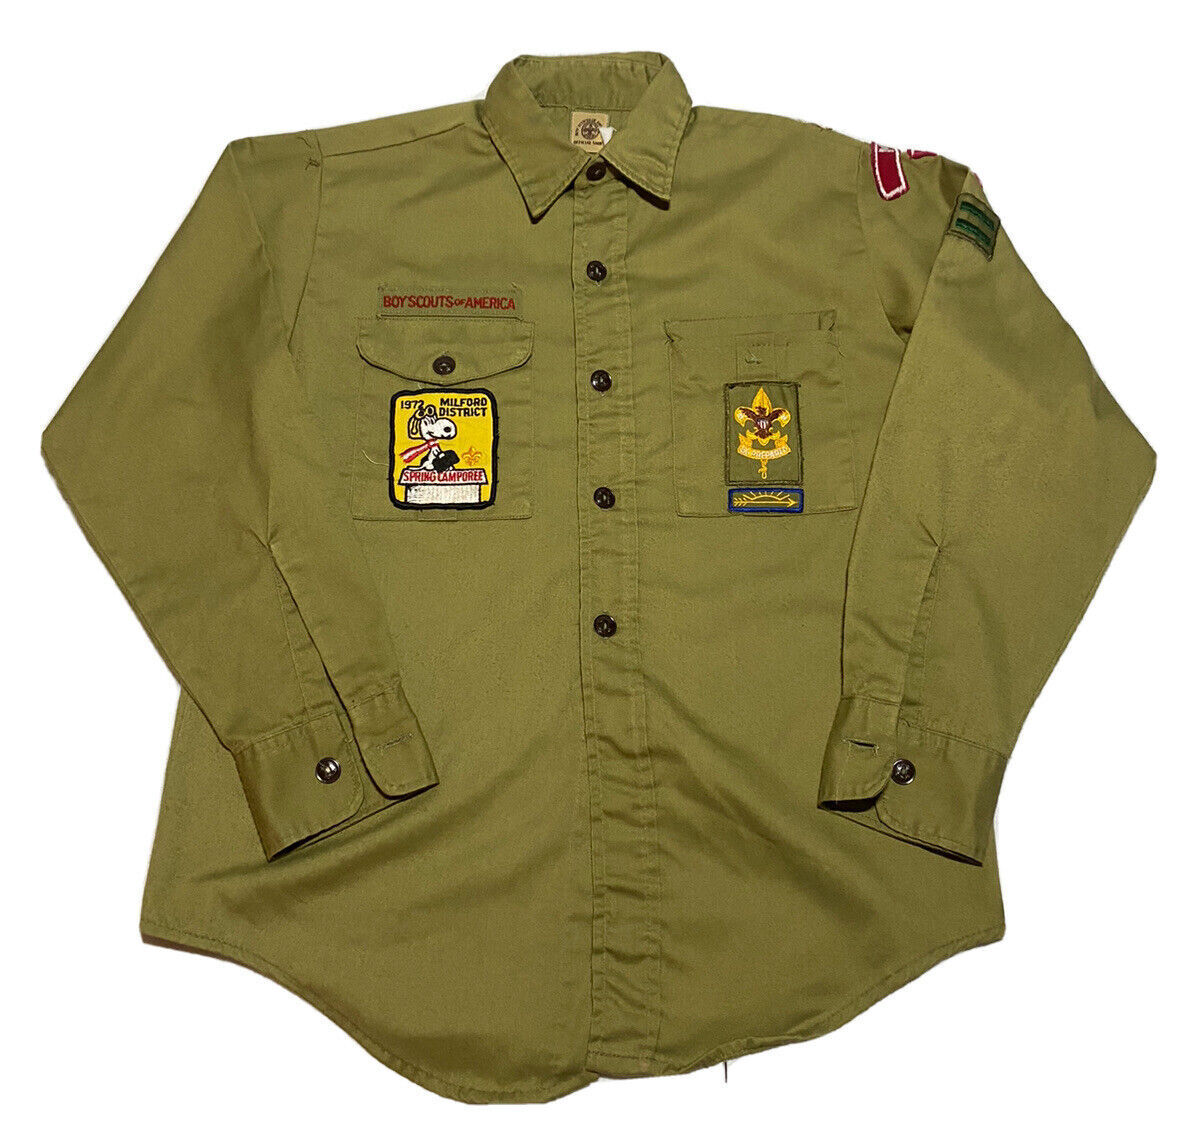 Vintage 70's Boy Scouts Shirt Snoopy Patch Size Small J3